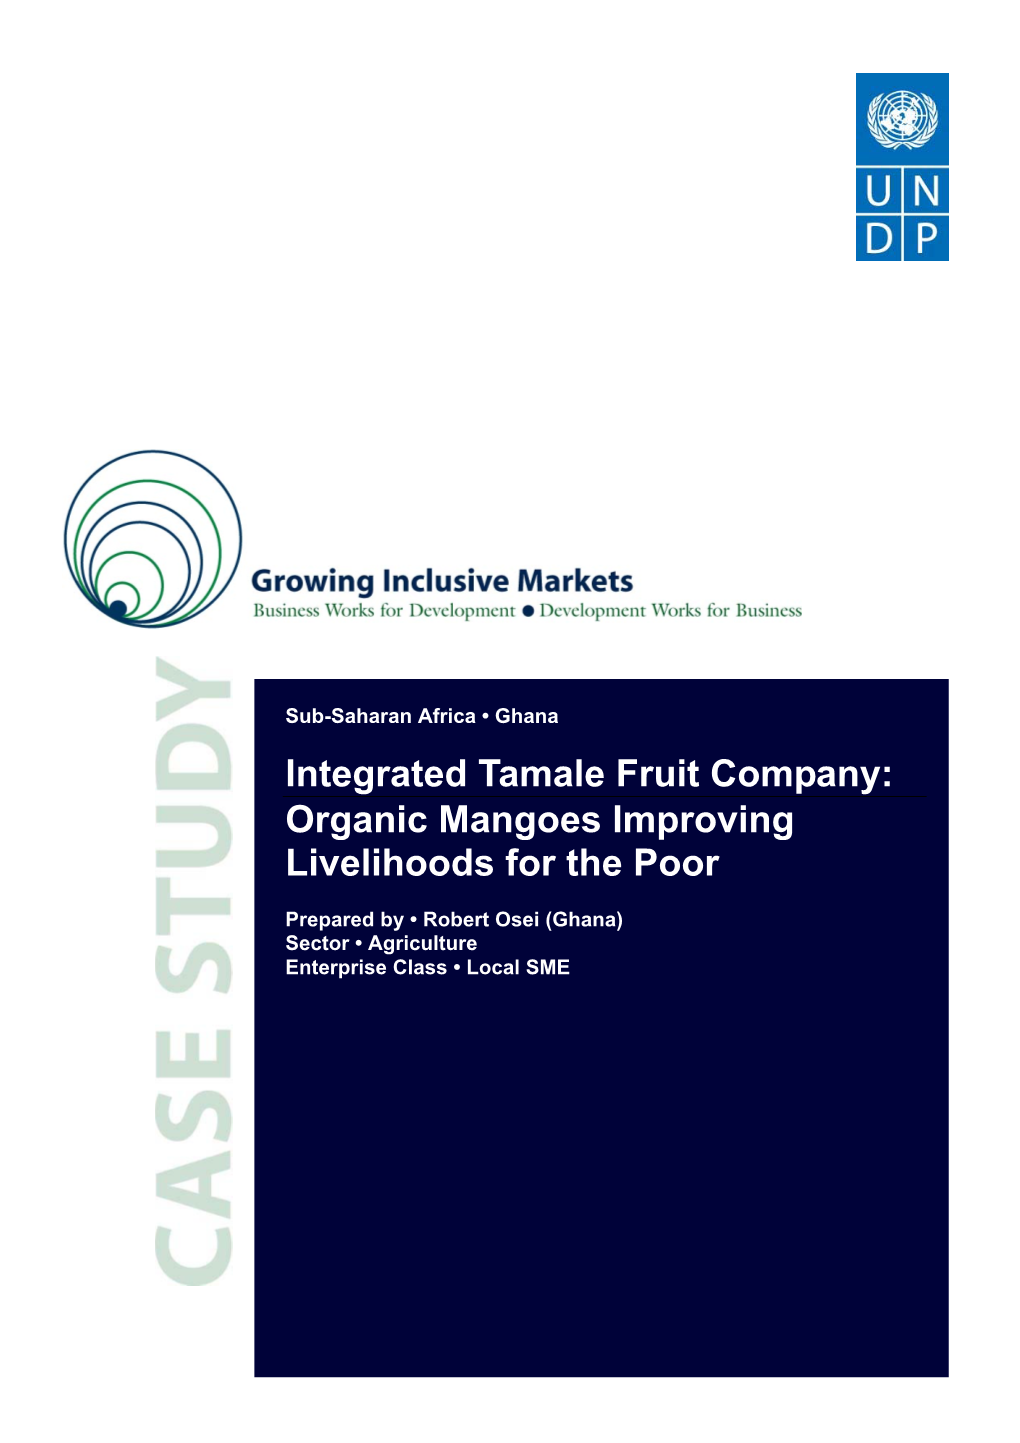 ITFC Organic Mangoes in Ghana